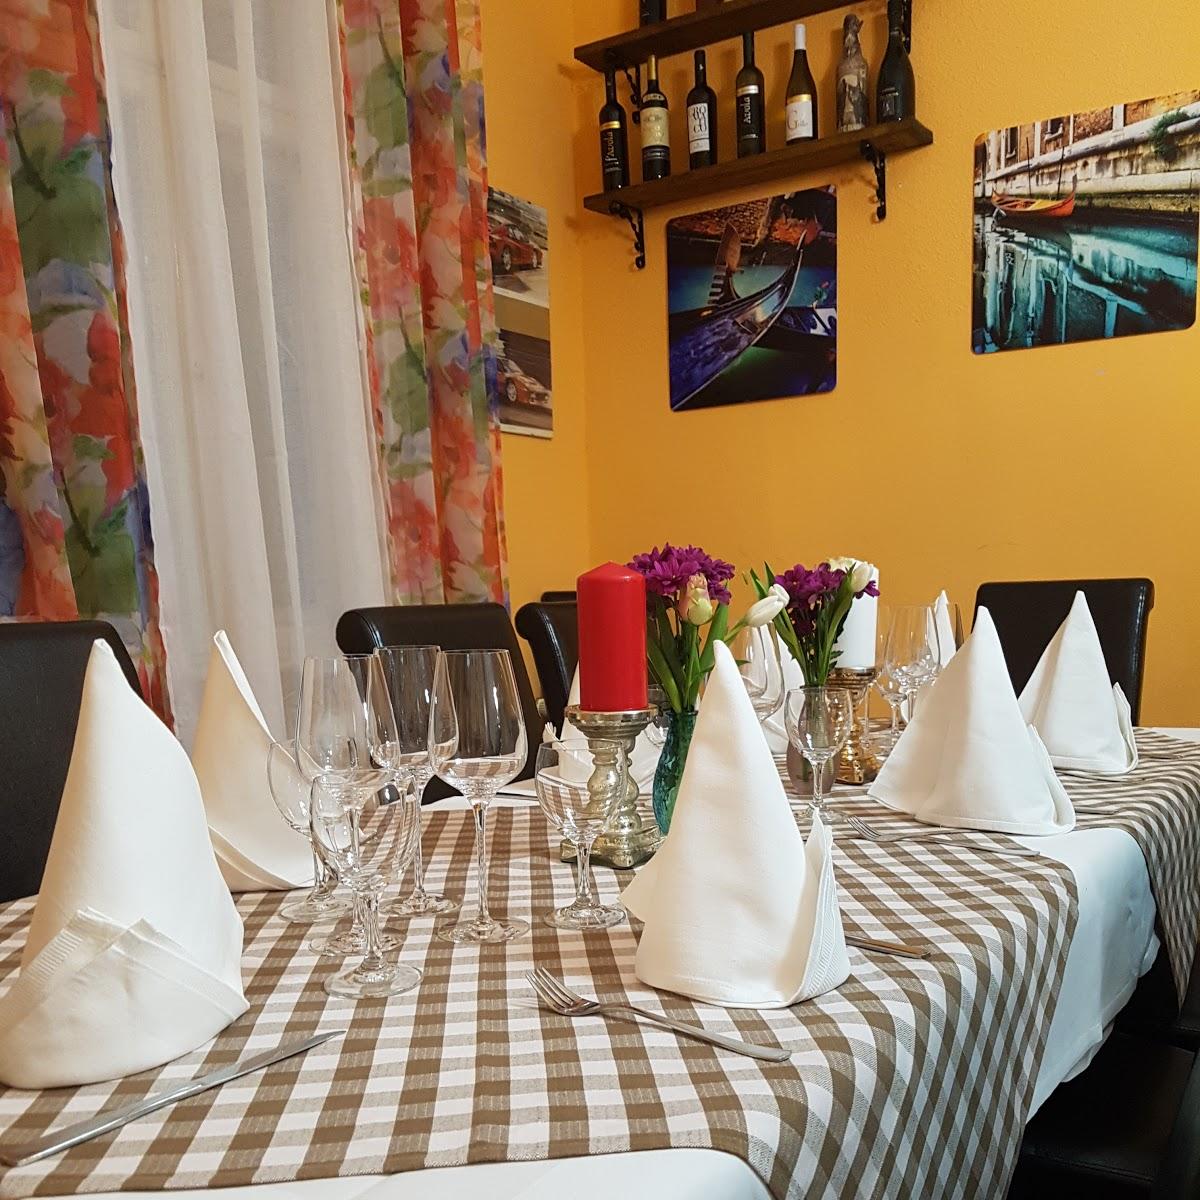 Restaurant "Trattoria Friulana" in  Land